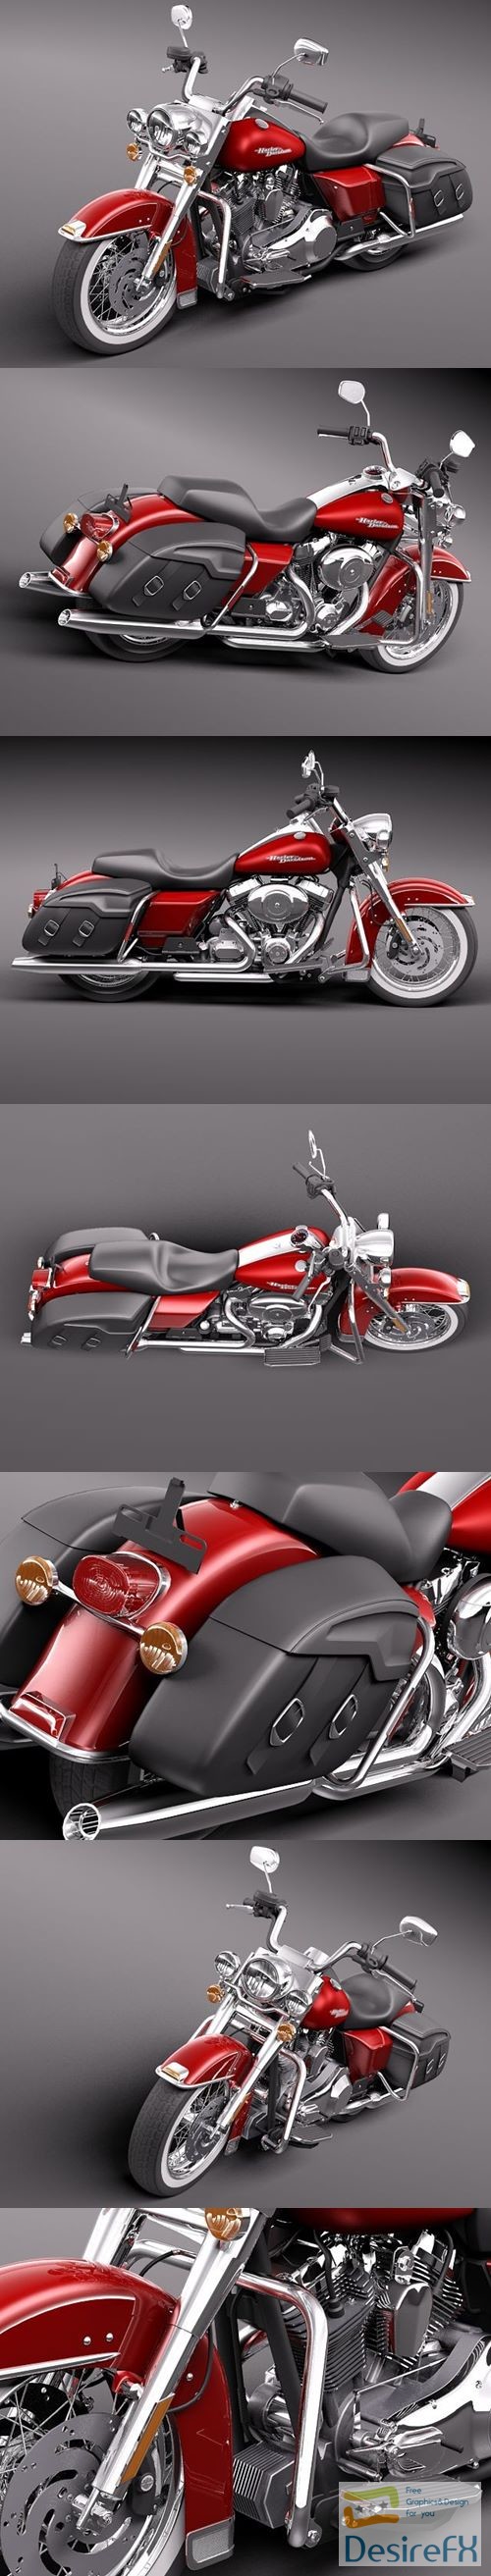 Harley Davidson Road King Classic 2011 3D Model